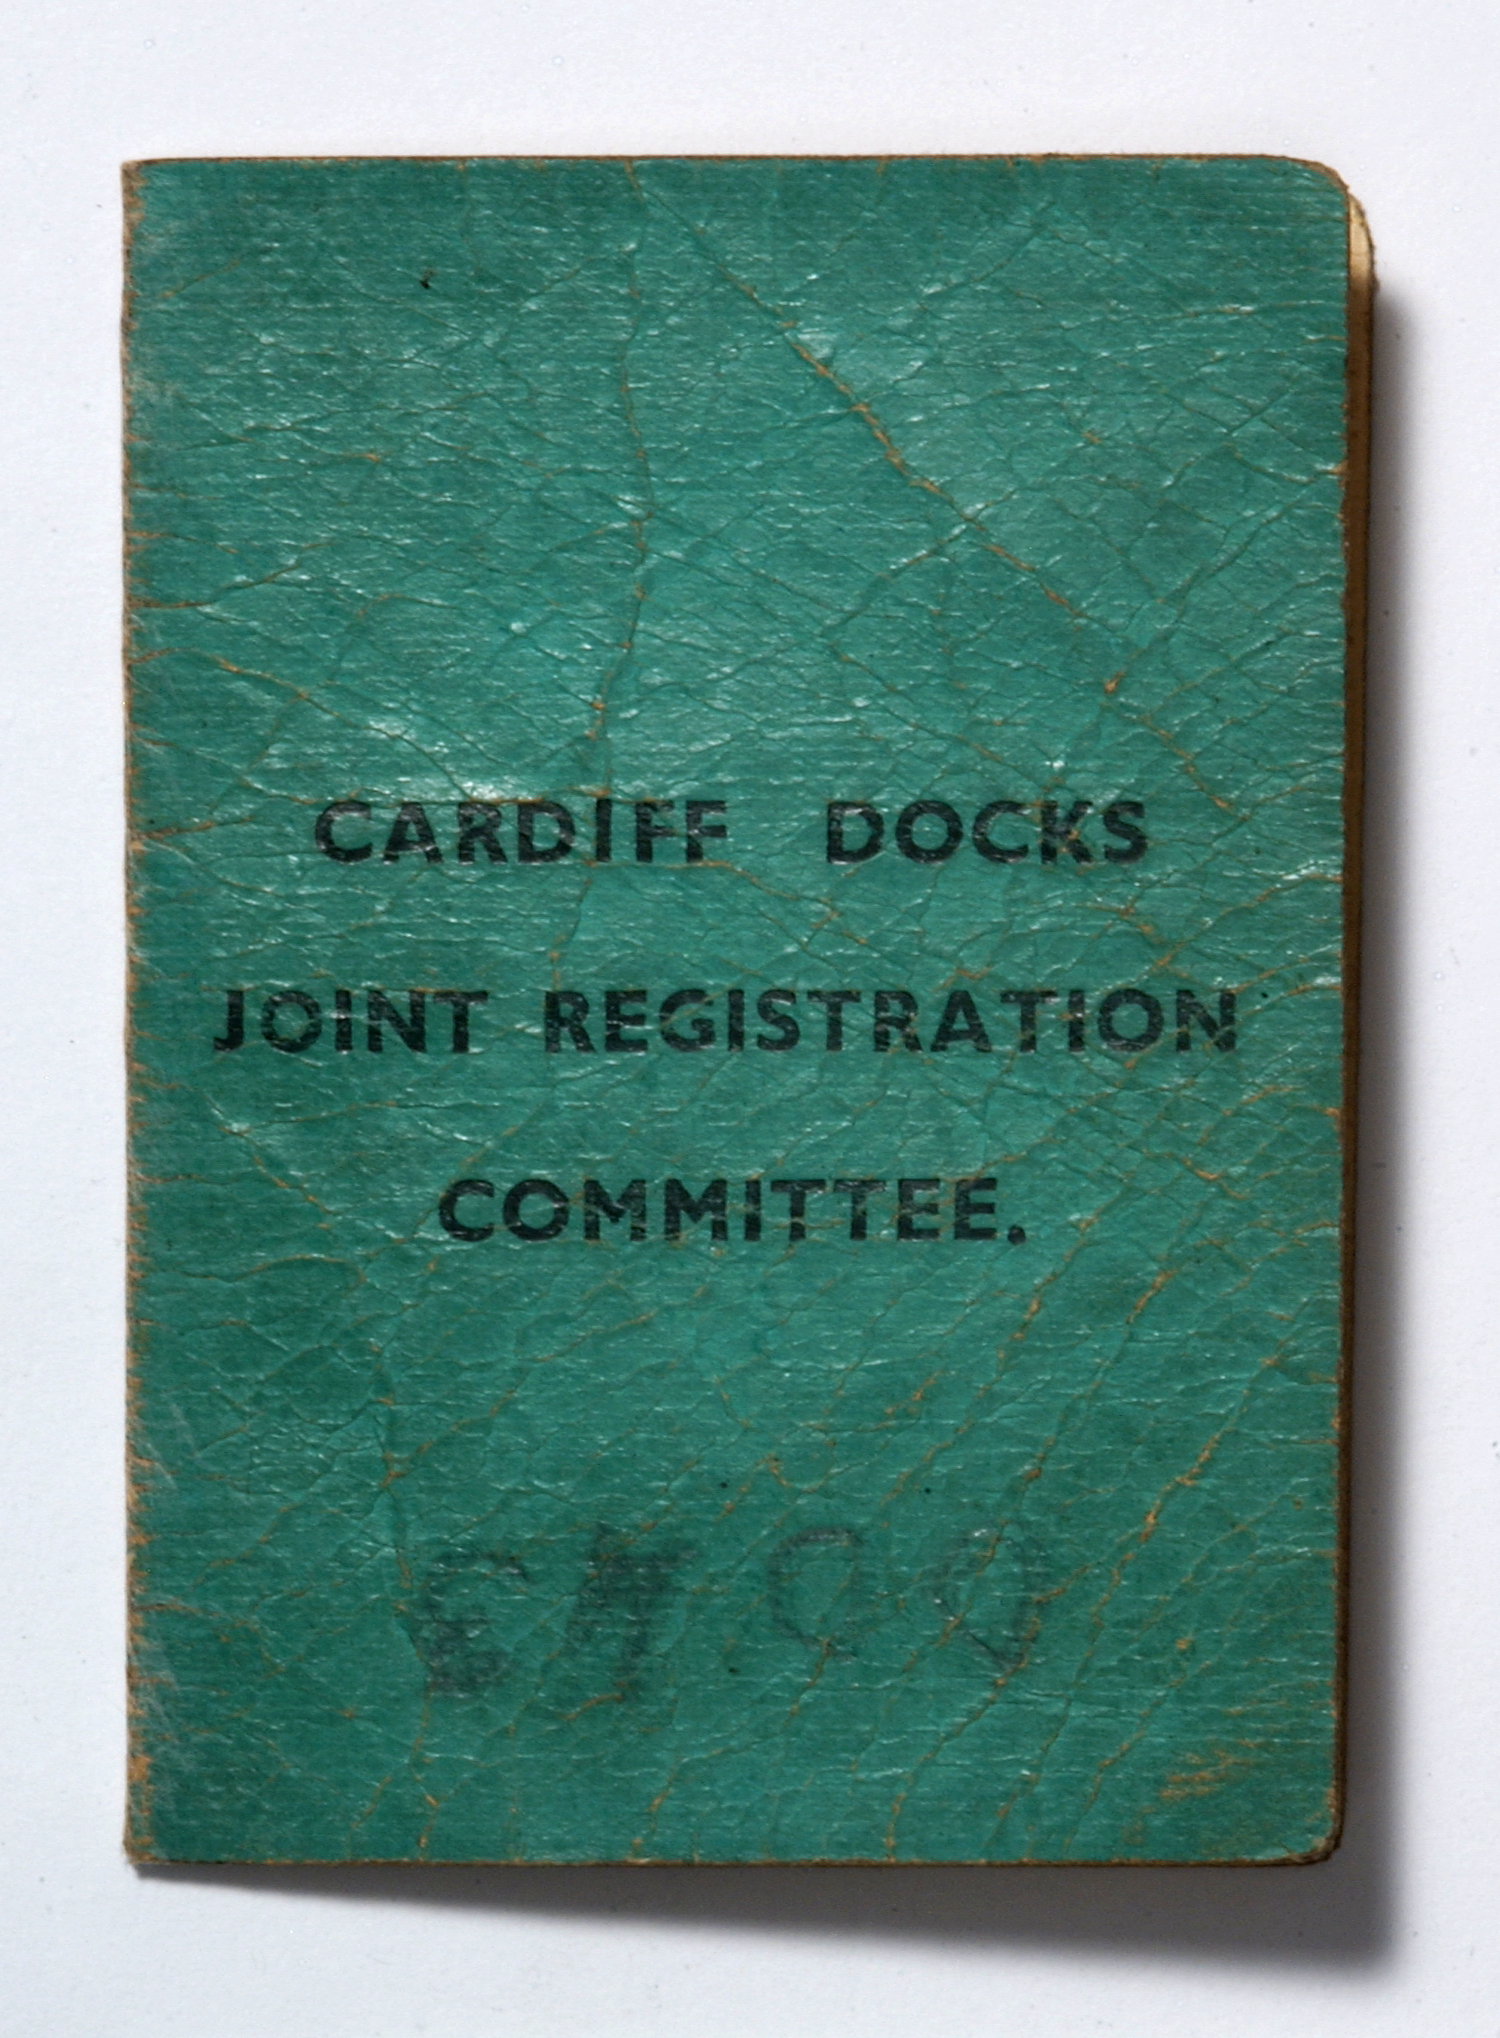 Cardiff Docks, registered worker card